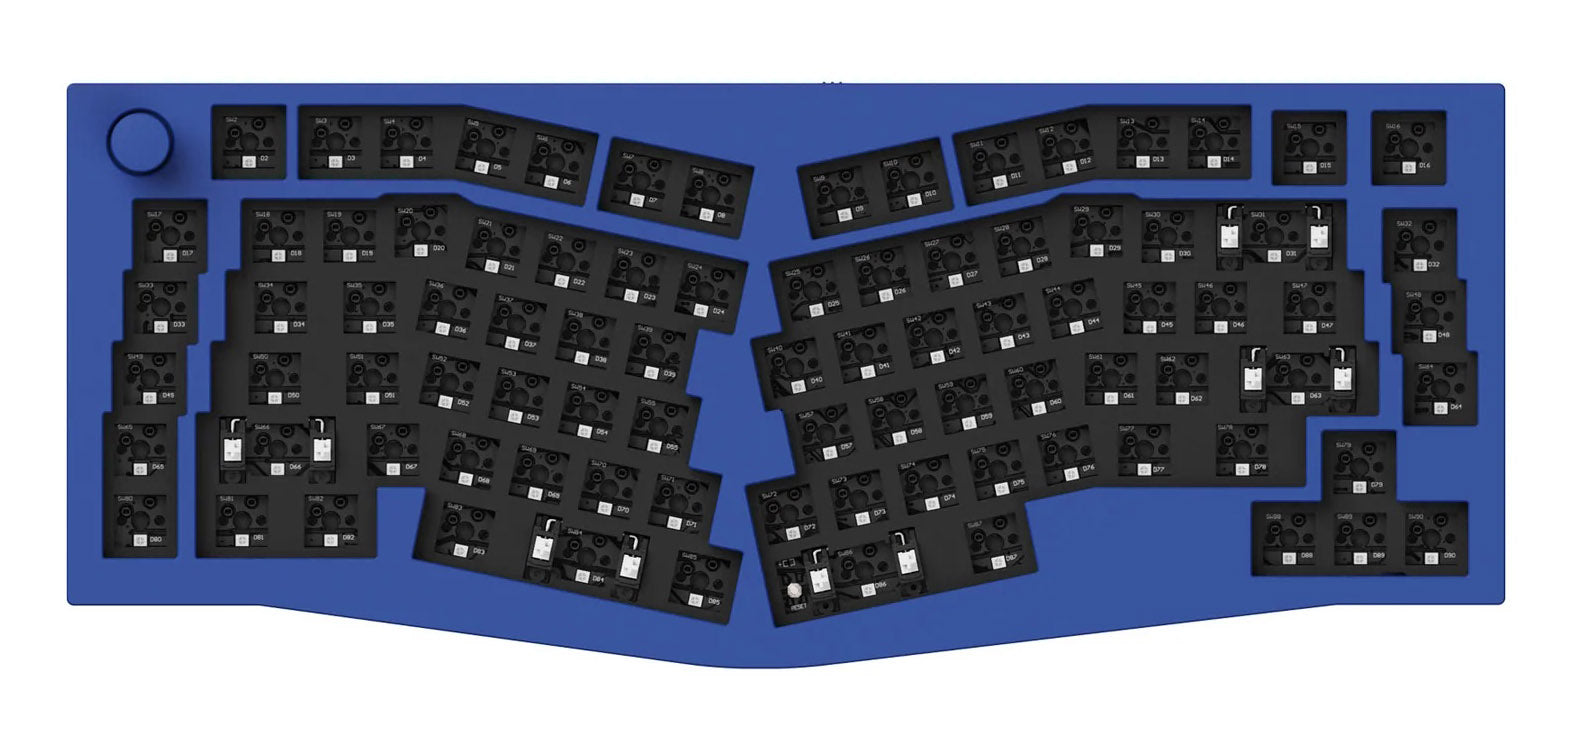 Keychron Q10 w/ Knob Blue Aluminum Barebones Mechanical Keyboard